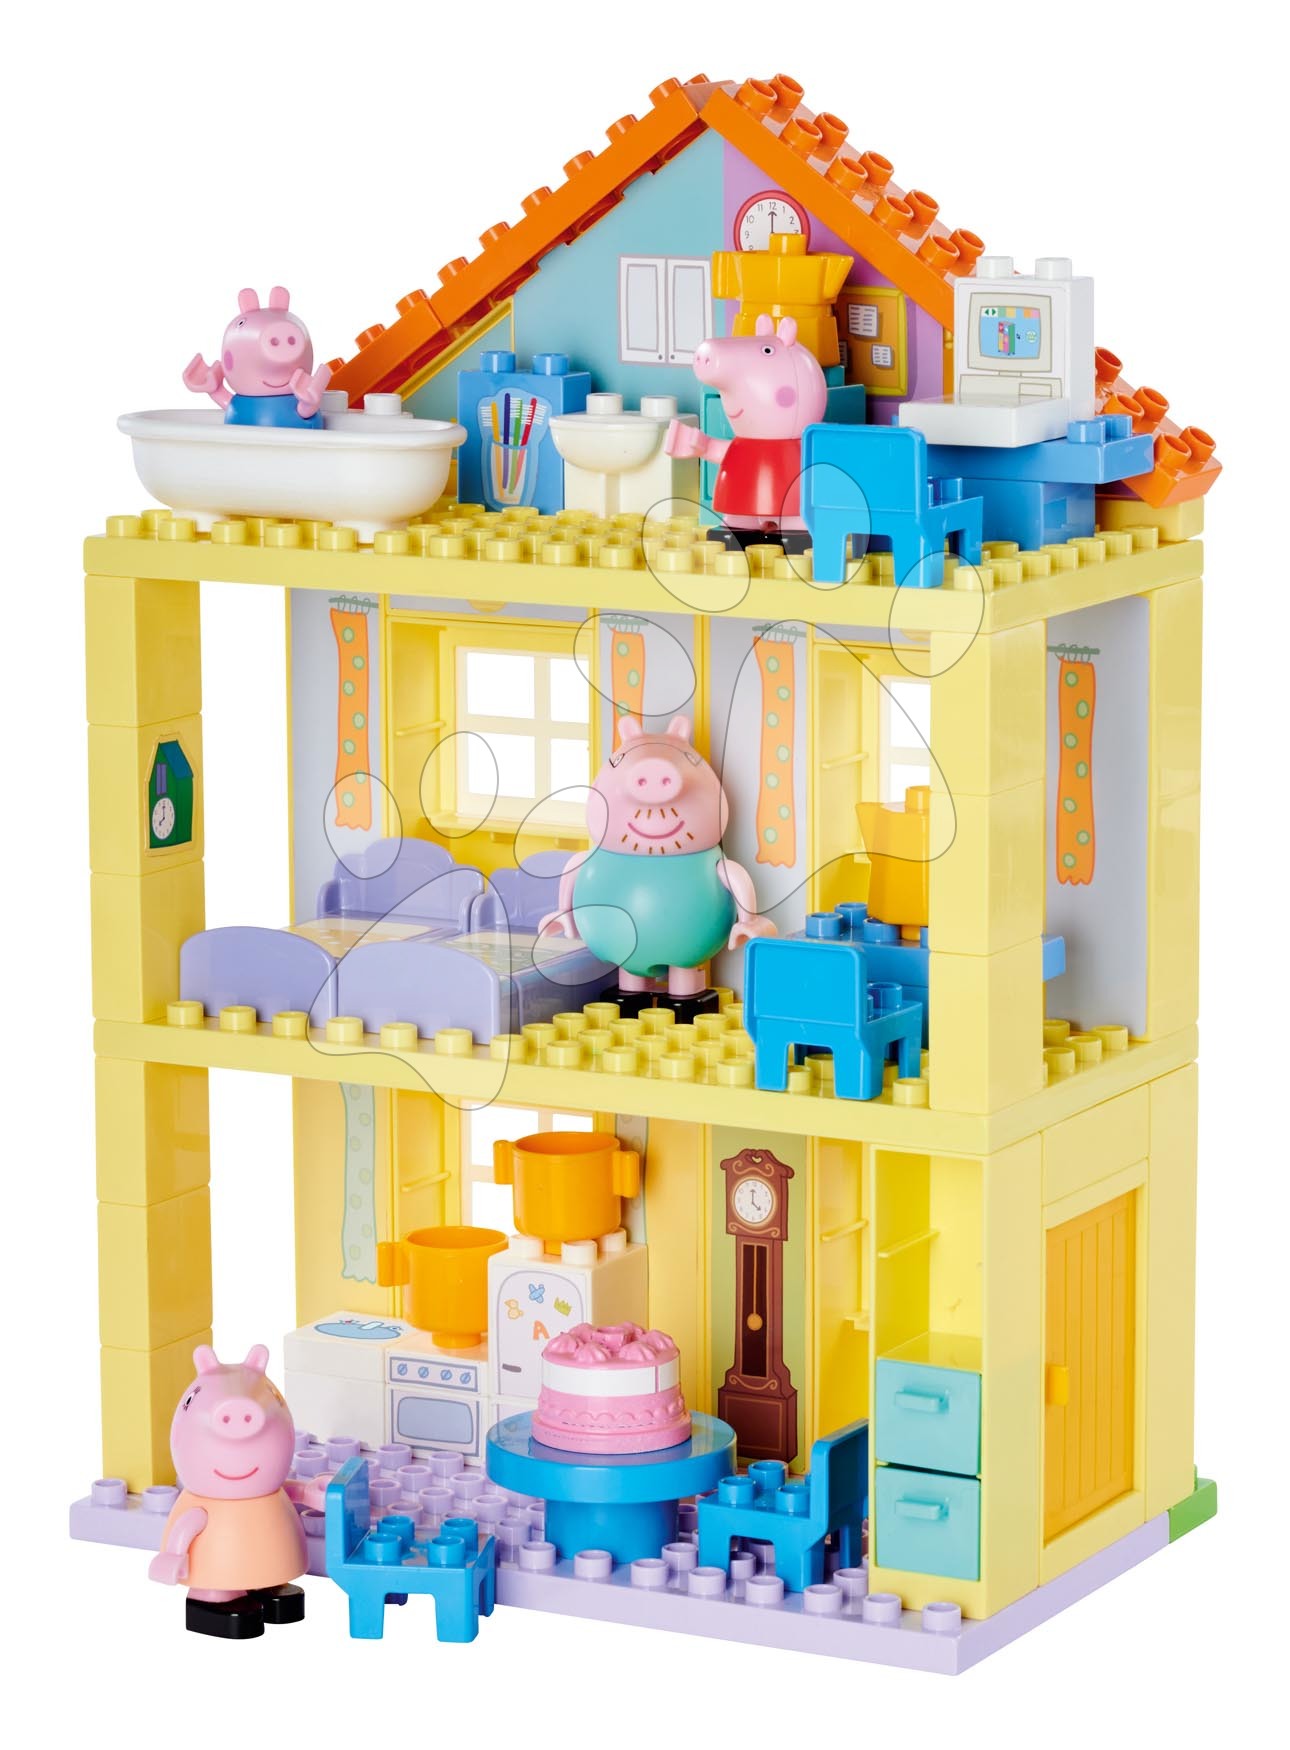 Kocke BIG-Bloxx kot lego - Kocke Peppa Pig Family House PlayBig Bloxx BIG s 4 figuricami in 3 nadstropji 86 delov od 18 mes